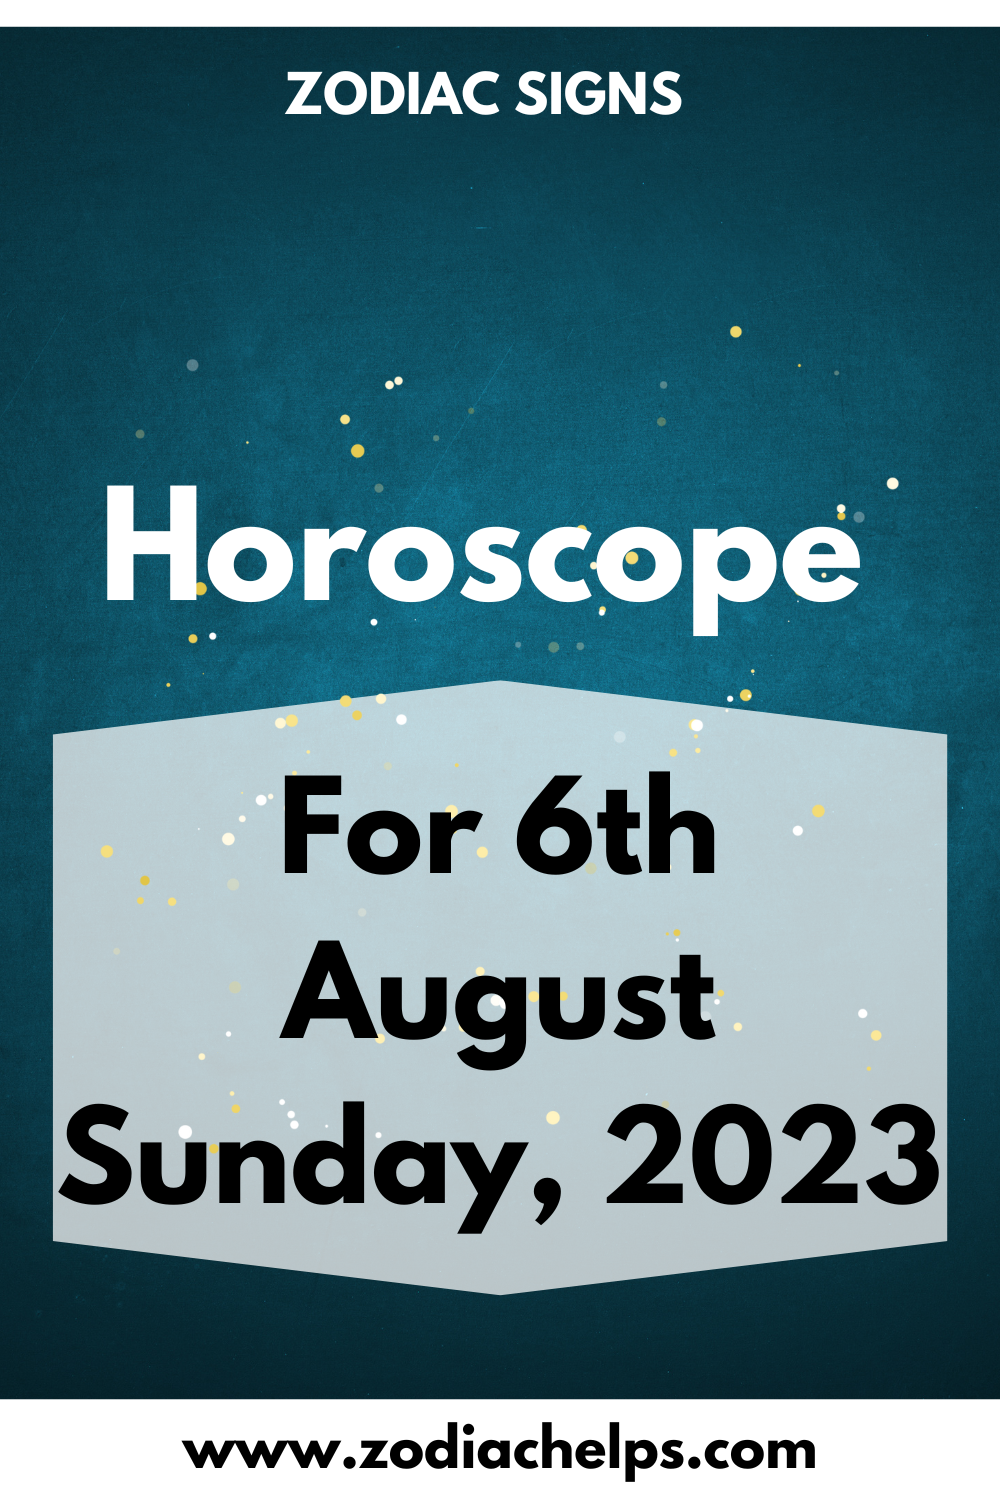 Horoscope for 6th August Sunday, 2023